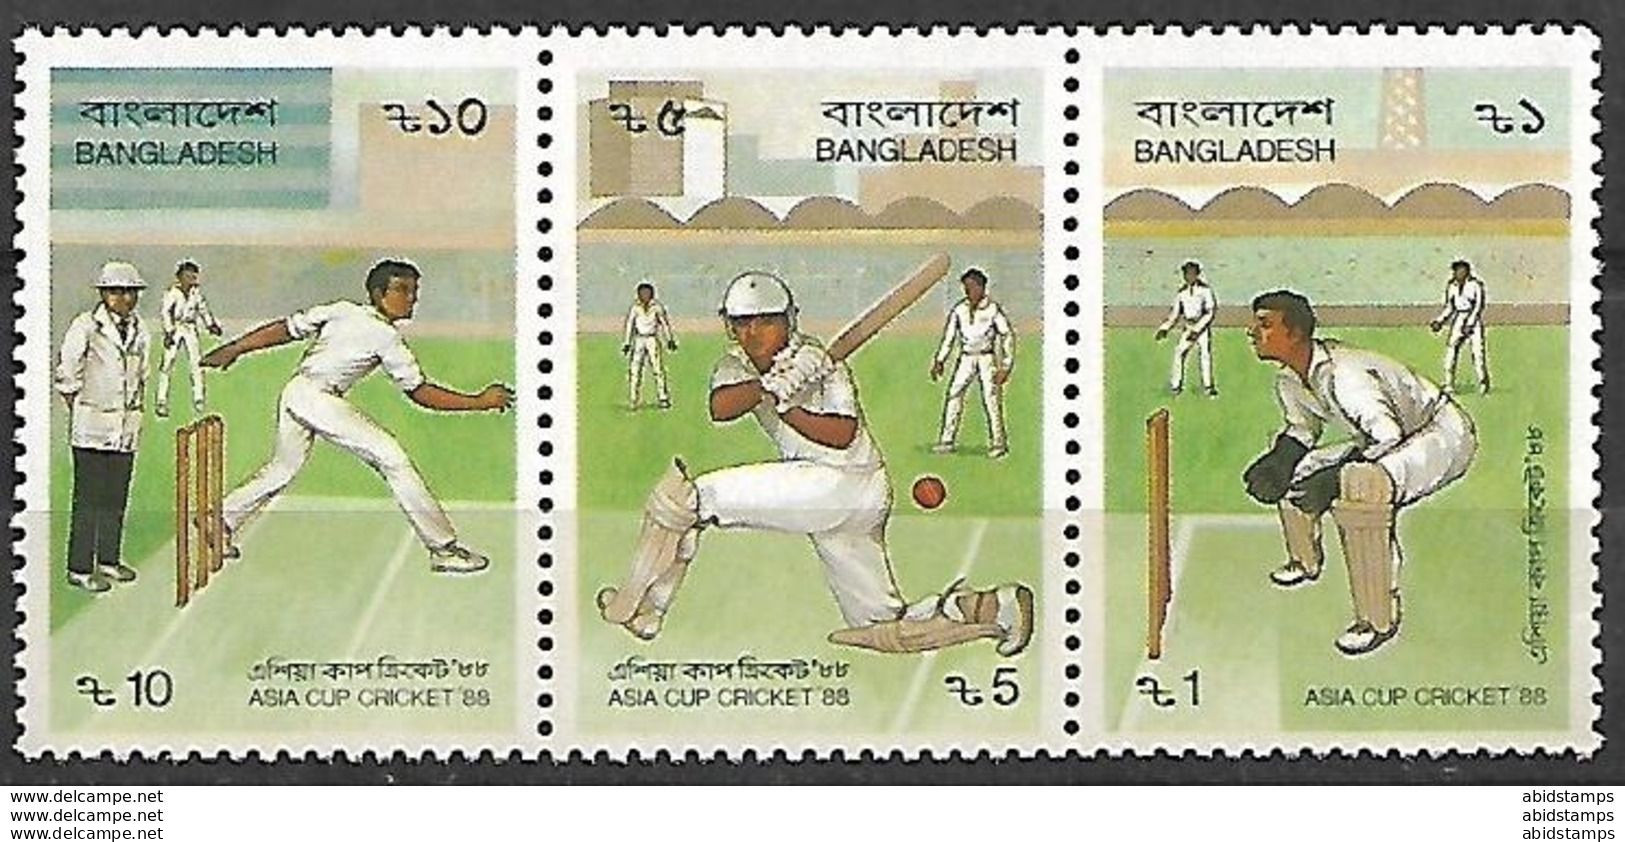 BANGLADESH STAMPS SET 1988 ASIA CUP CRICKET MNH - Bangladesch